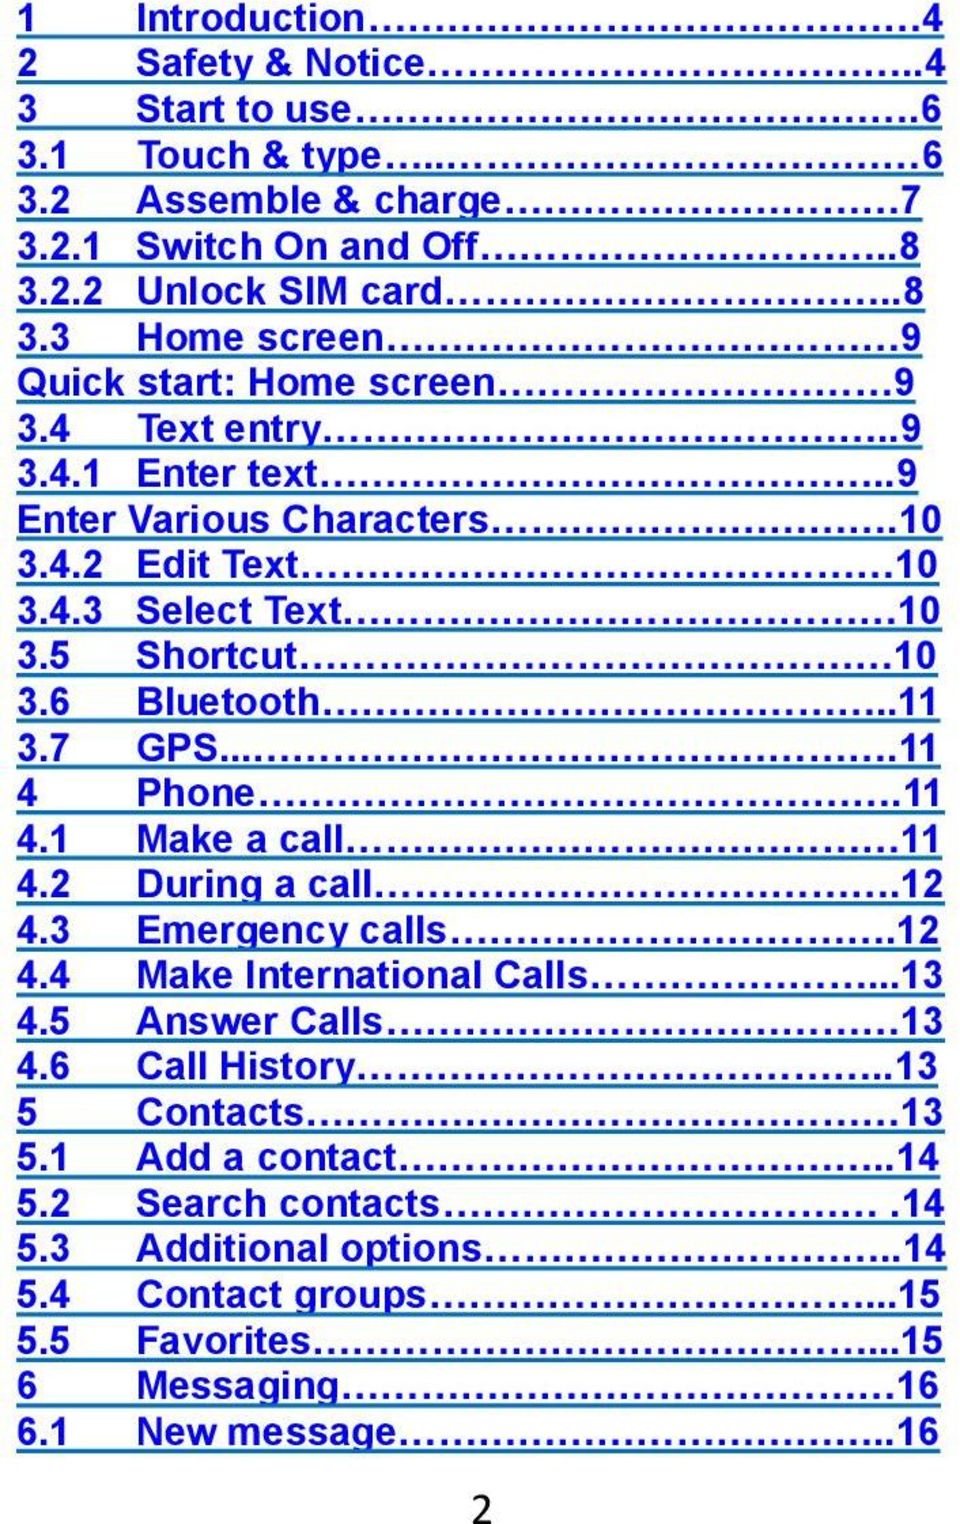 5 Shortcut 10 3.6 Bluetooth..11 3.7 GPS....11 4 Phone.11 4.1 Make a call 11 4.2 During a call.12 4.3 Emergency calls.12 4.4 Make International Calls...13 4.